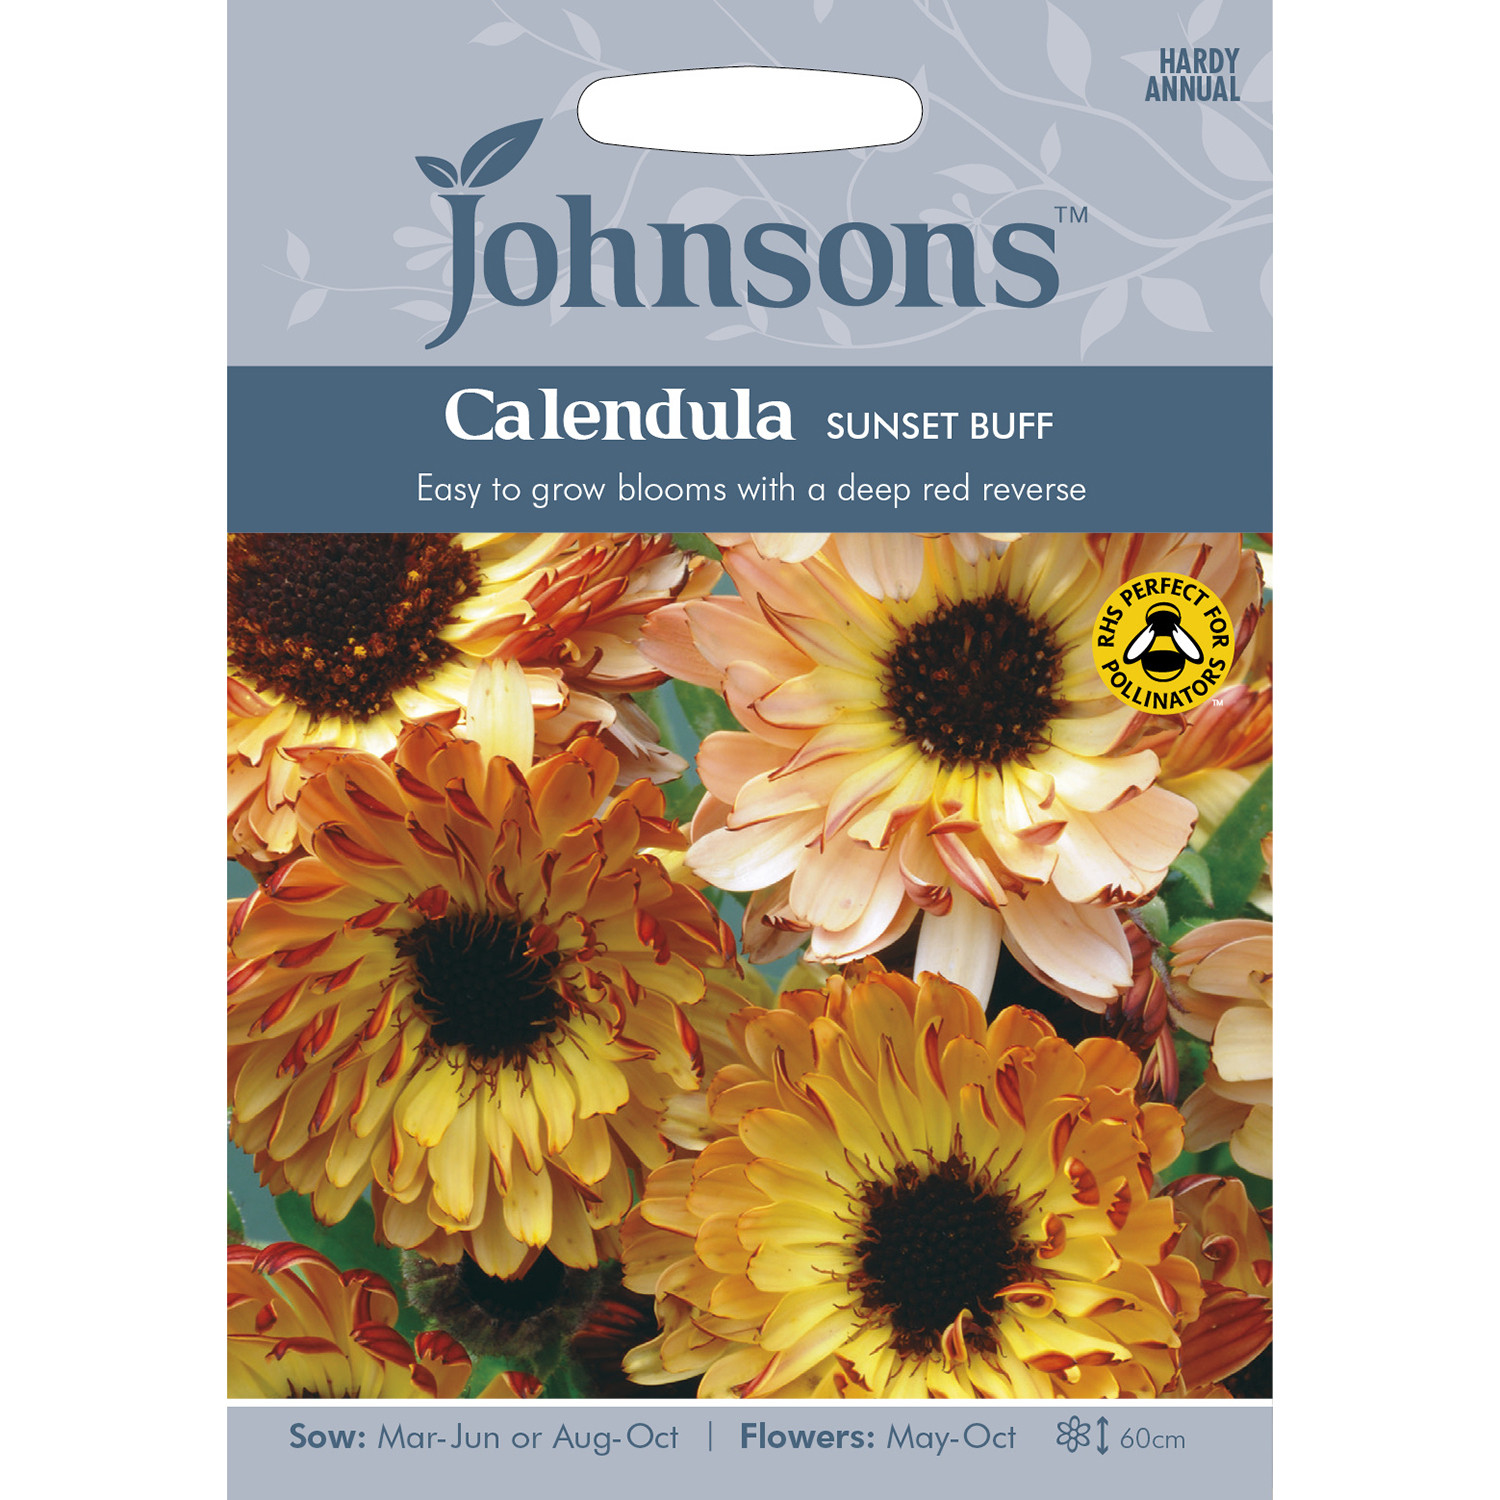 Johnsons Calendula Sunset Buff Flower Seeds Image 2